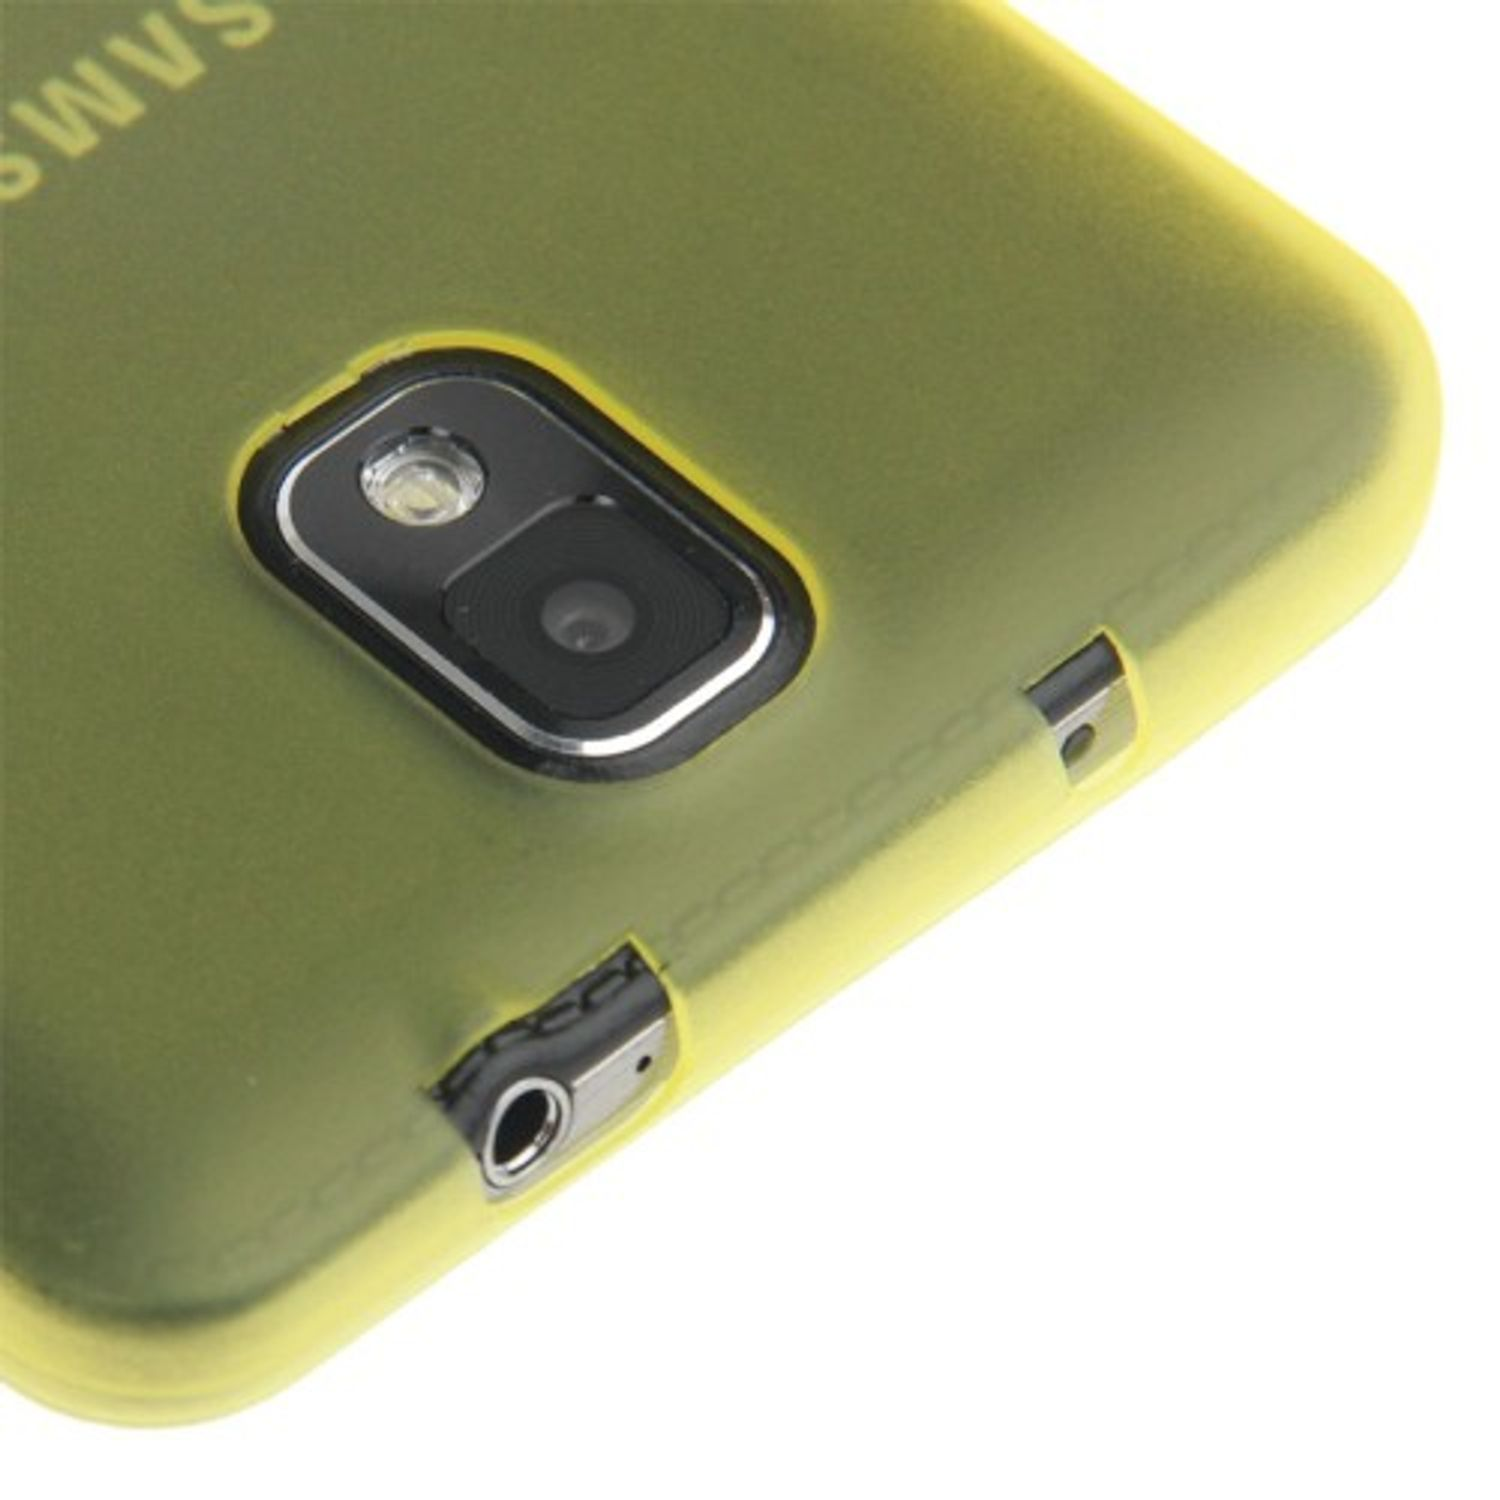 3, Samsung, KÖNIG Note Schutzhülle, DESIGN Violett Galaxy Backcover,